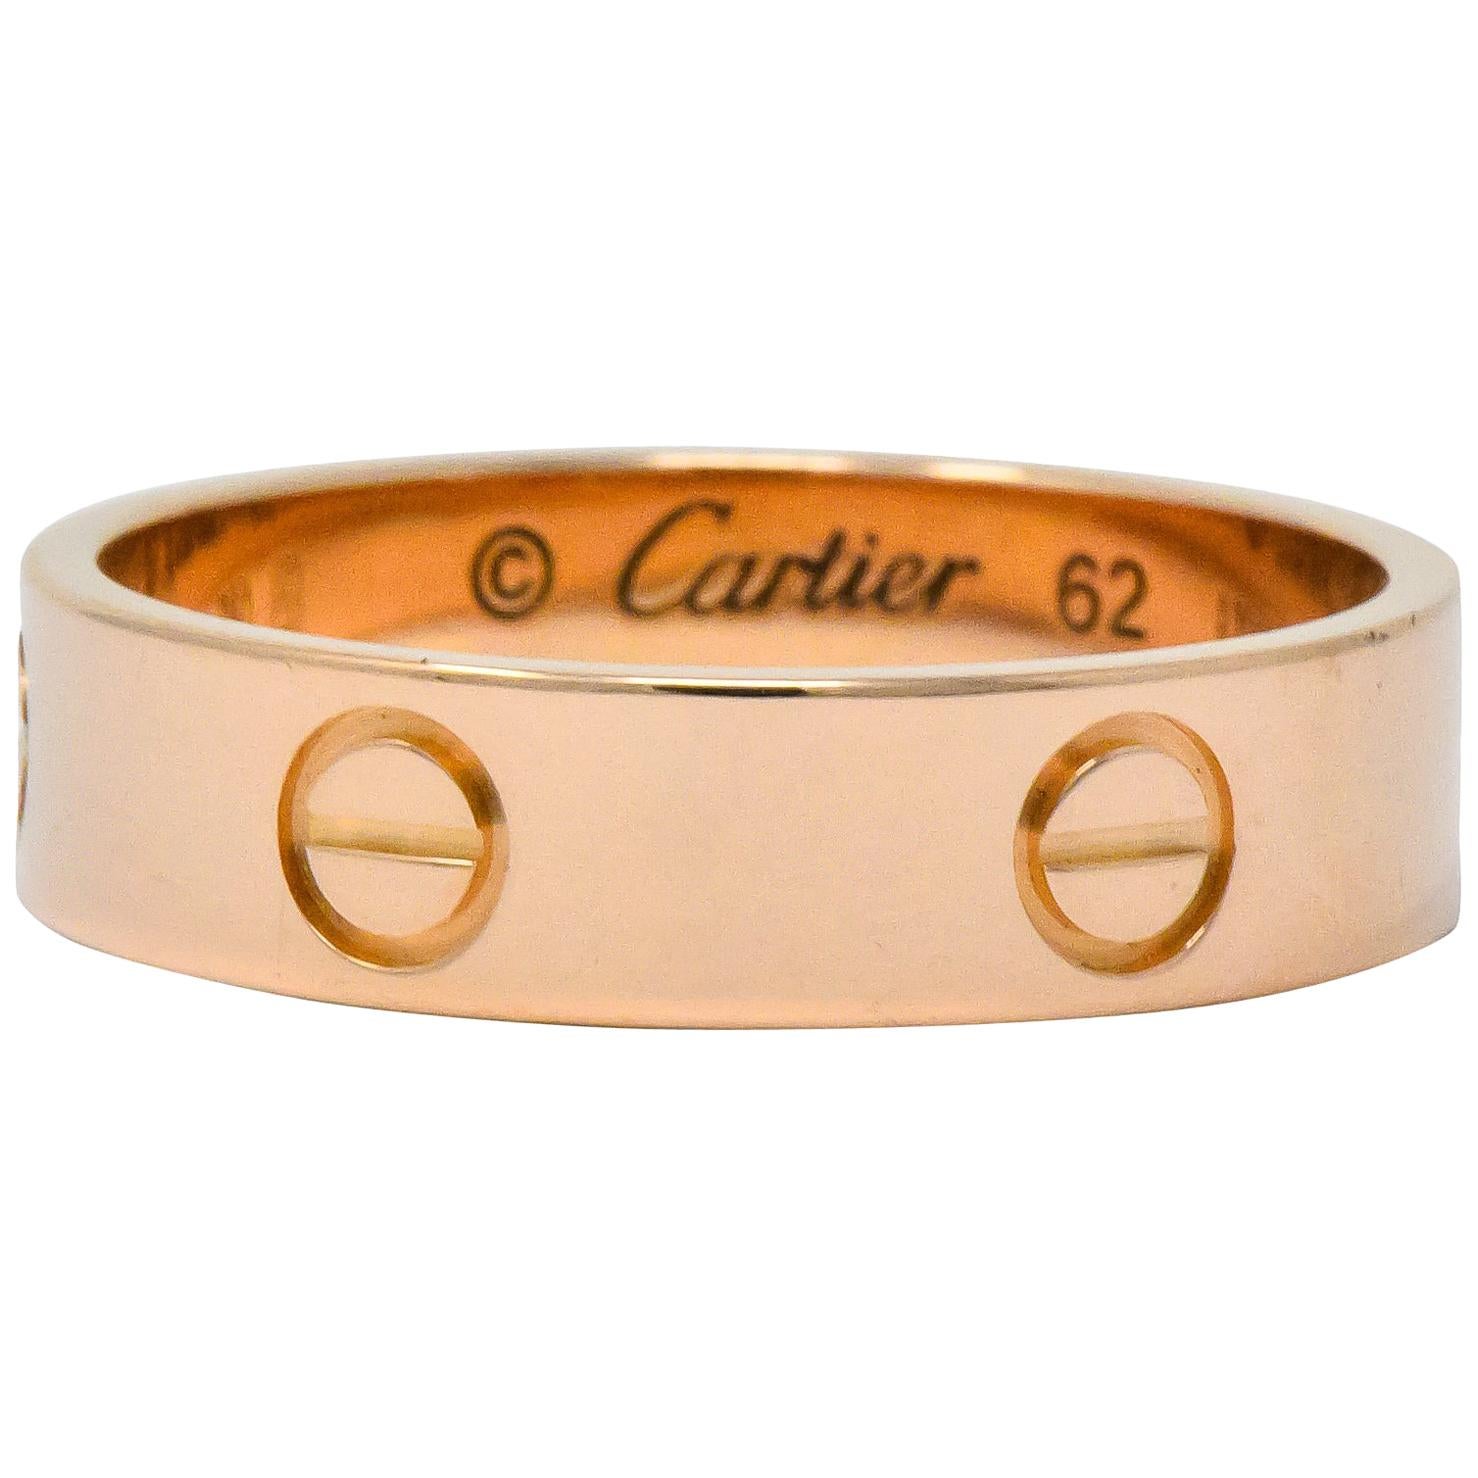 Cartier Love Vintage 18 Karat Rose Gold Band Ring